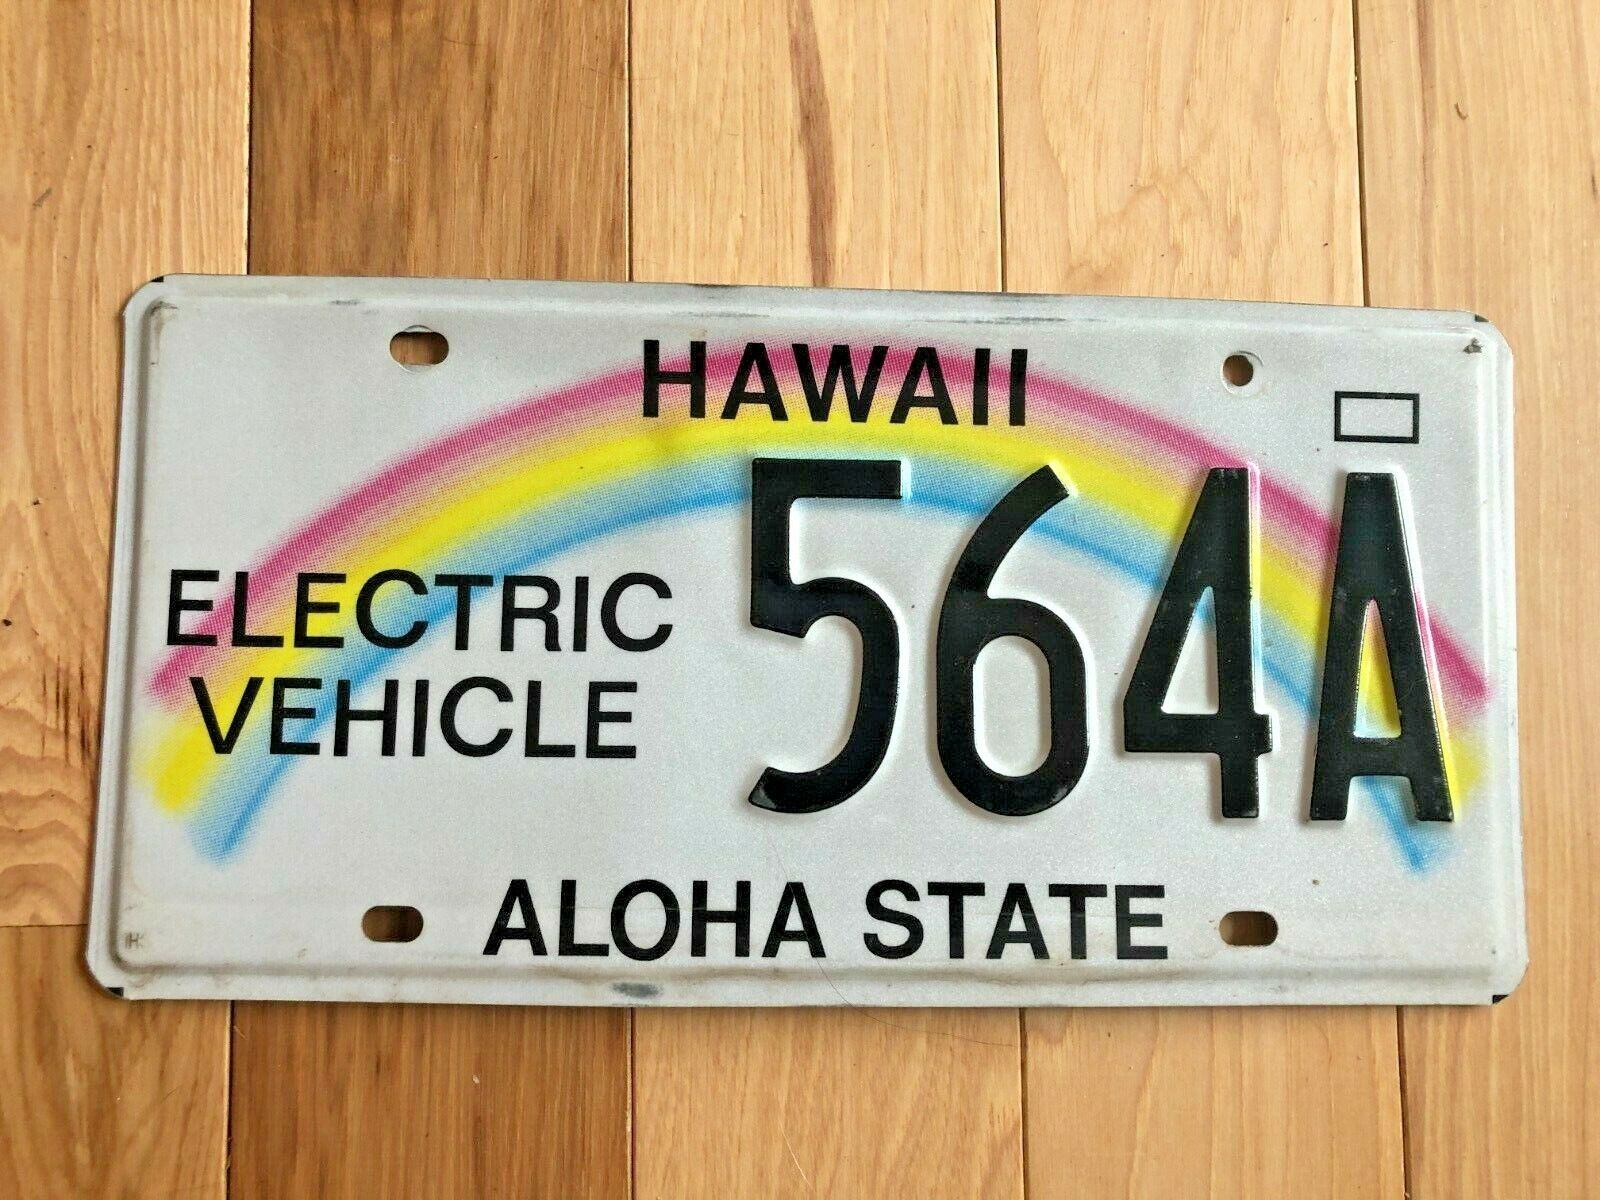 Hawaii Electric Vehicle License Plate